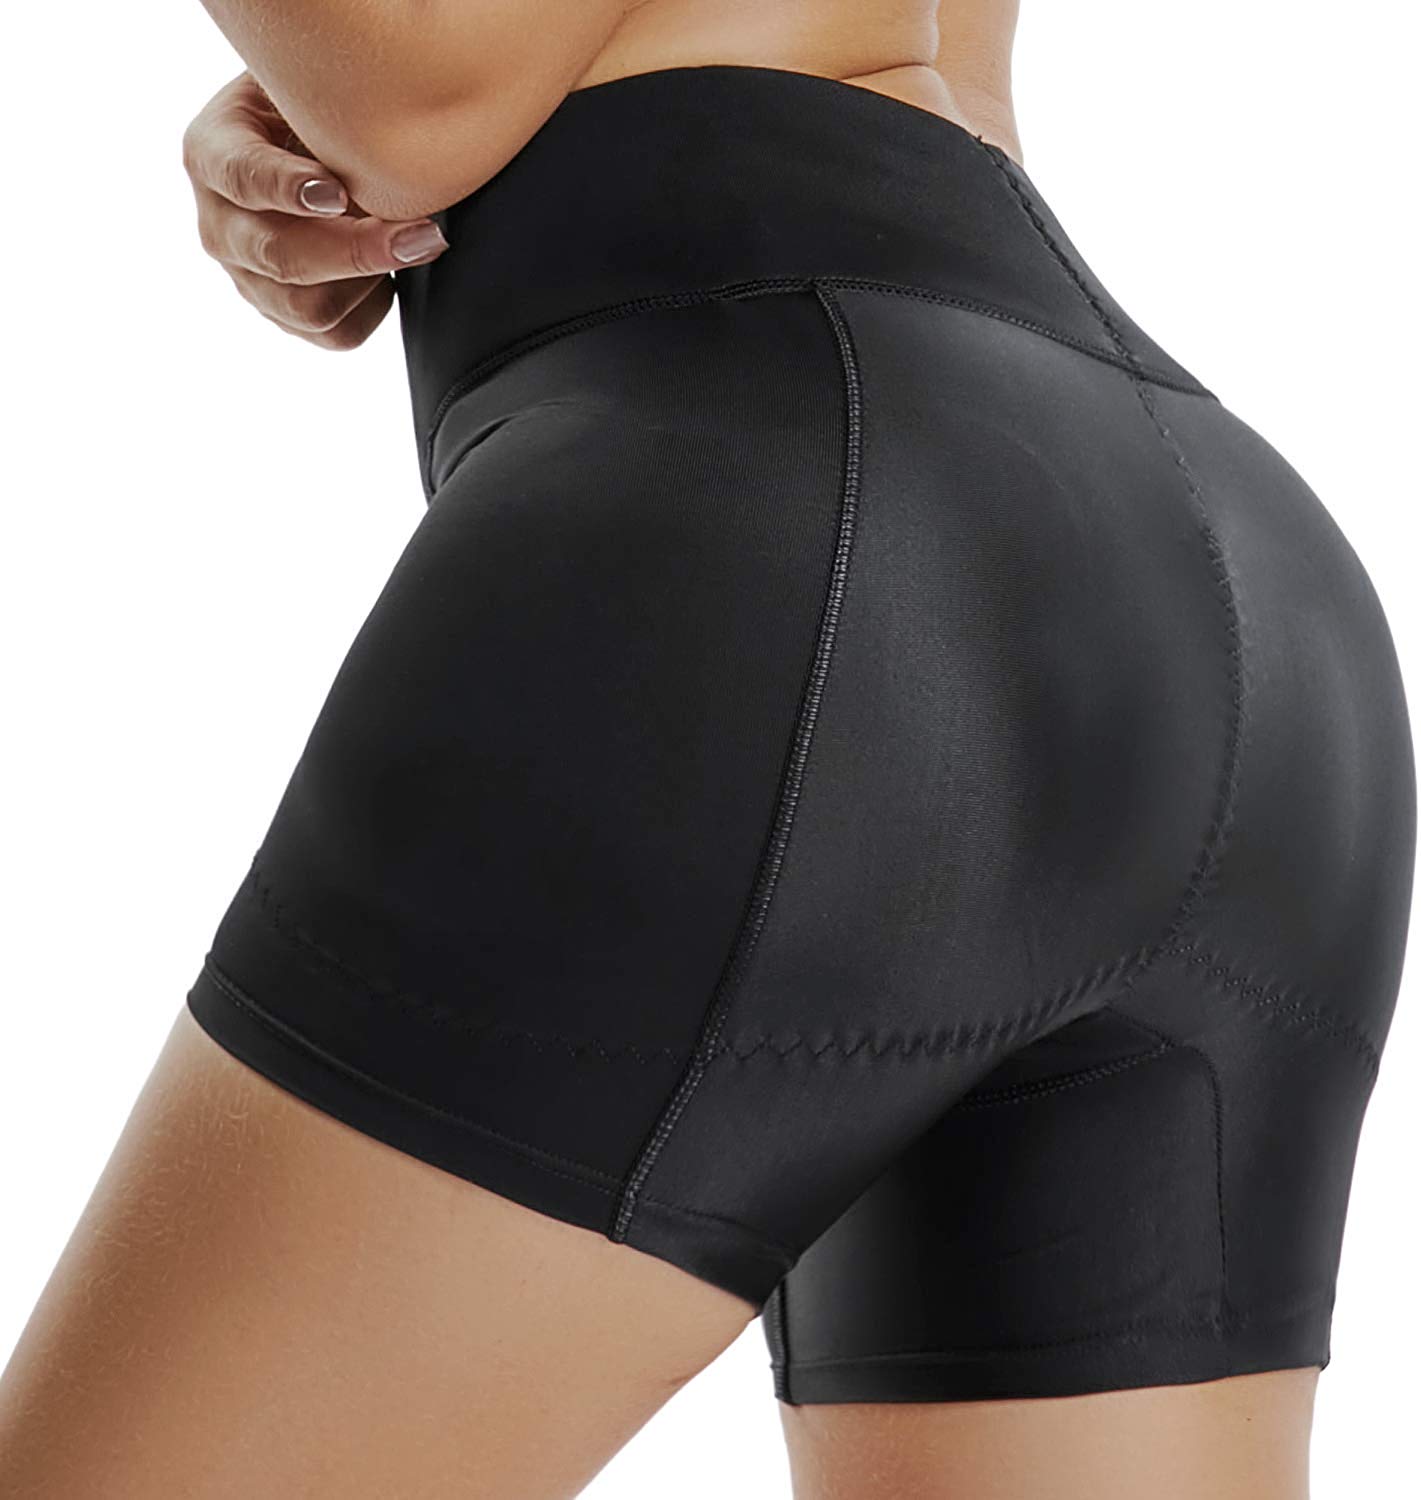 KIWI RATA Womens Seamless Butt Lifter Padded Lace Panties Enhancer Underwear